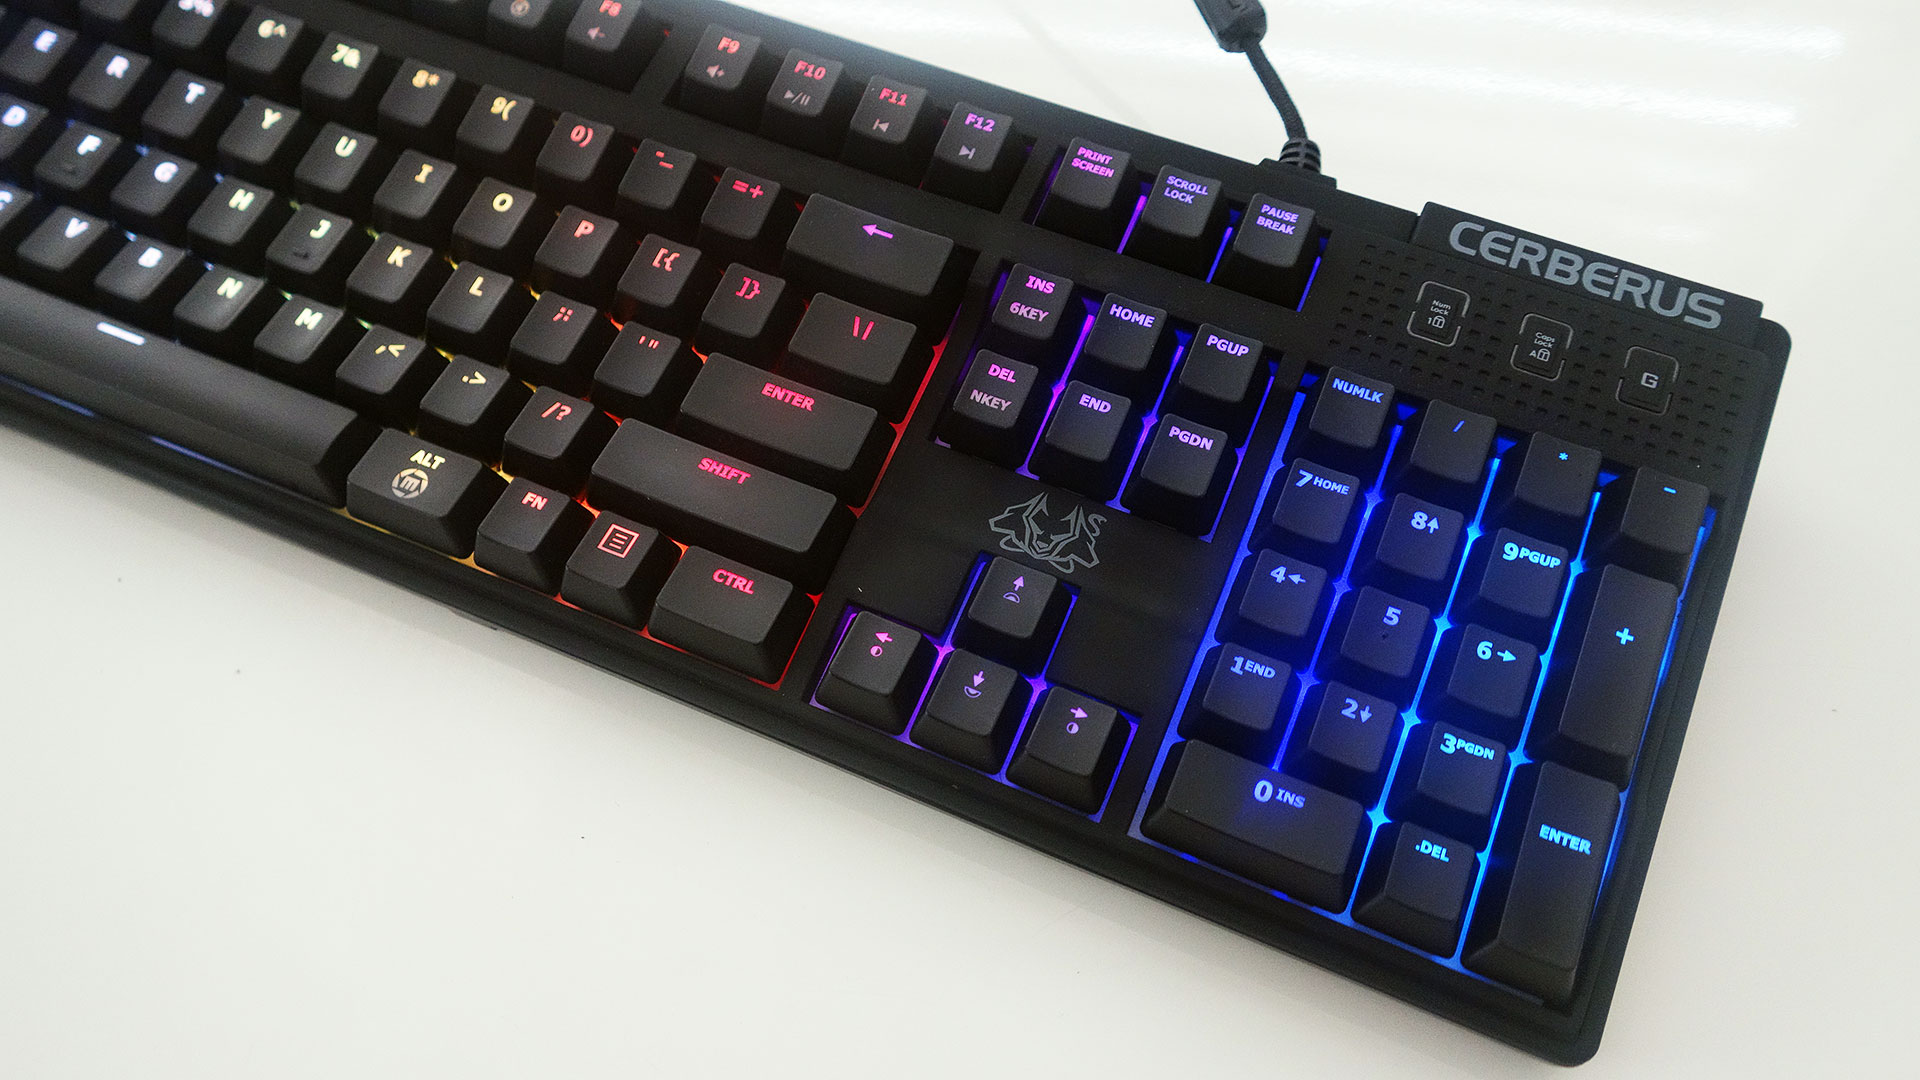 ASUS Cerberus Mech RGB Mechanical Gaming Keyboard Review